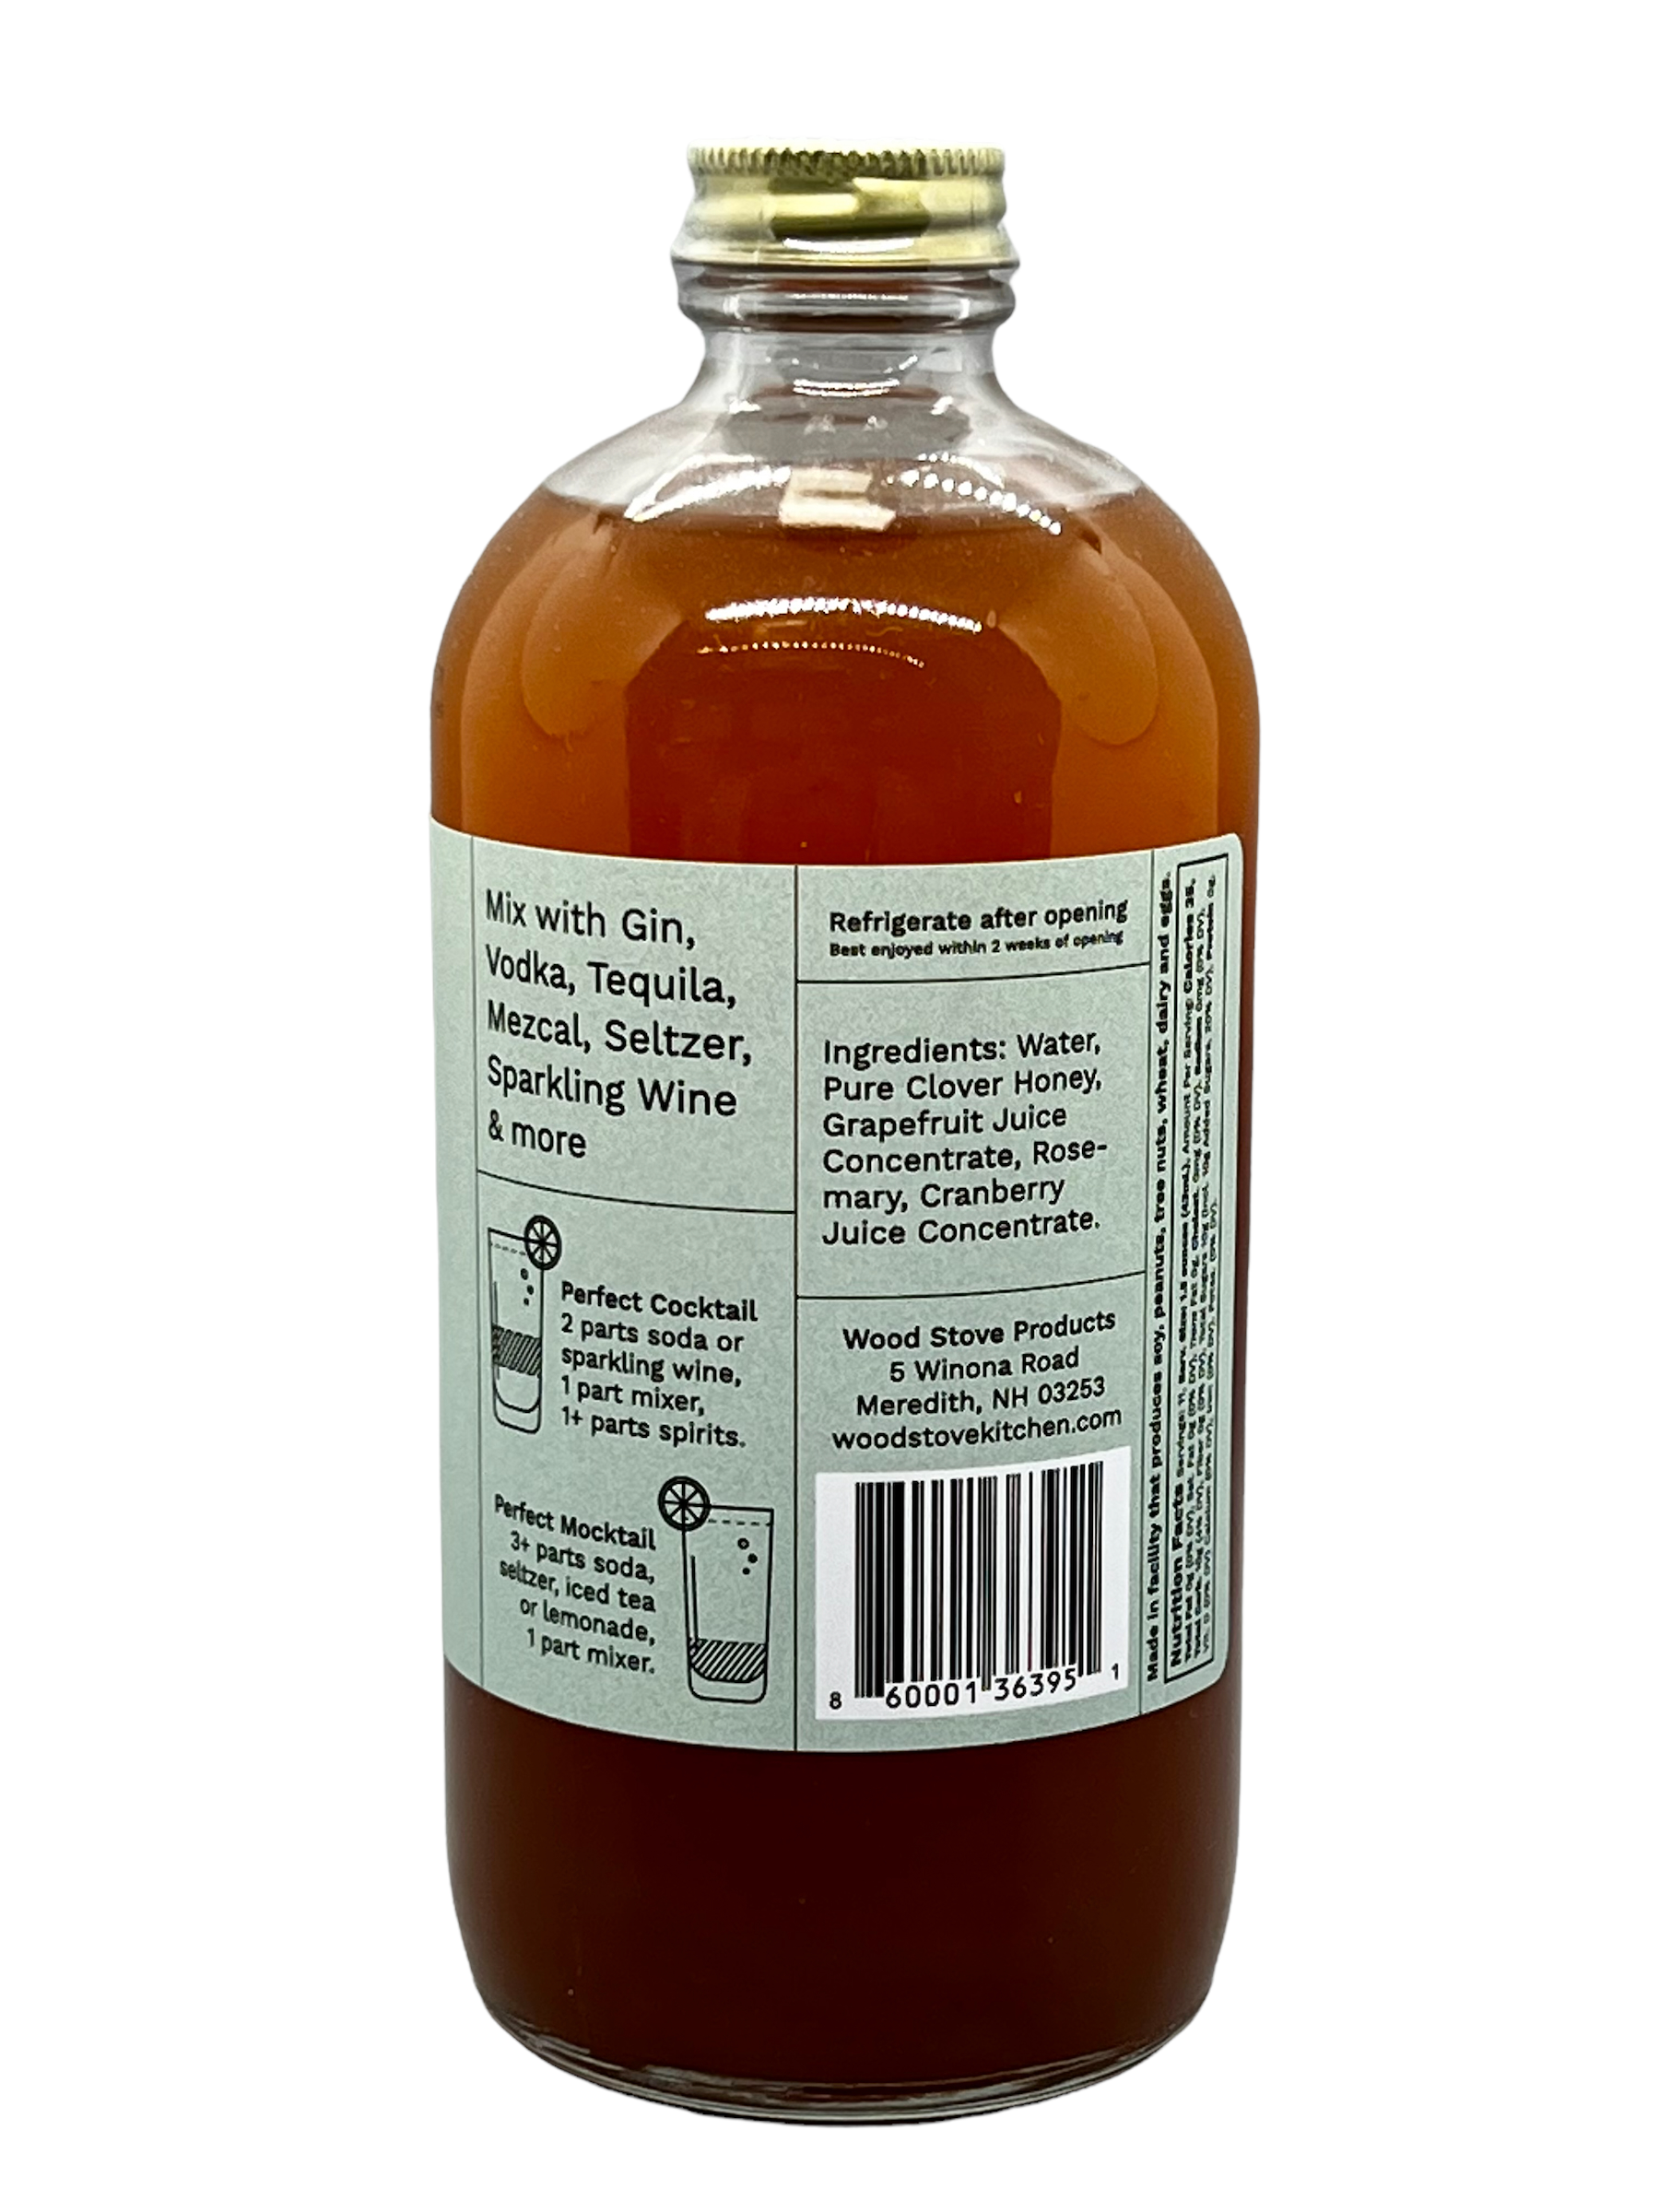 Woodstove Kitchen Grapefruit Rosemary drink mixer 16 oz side label ingredients